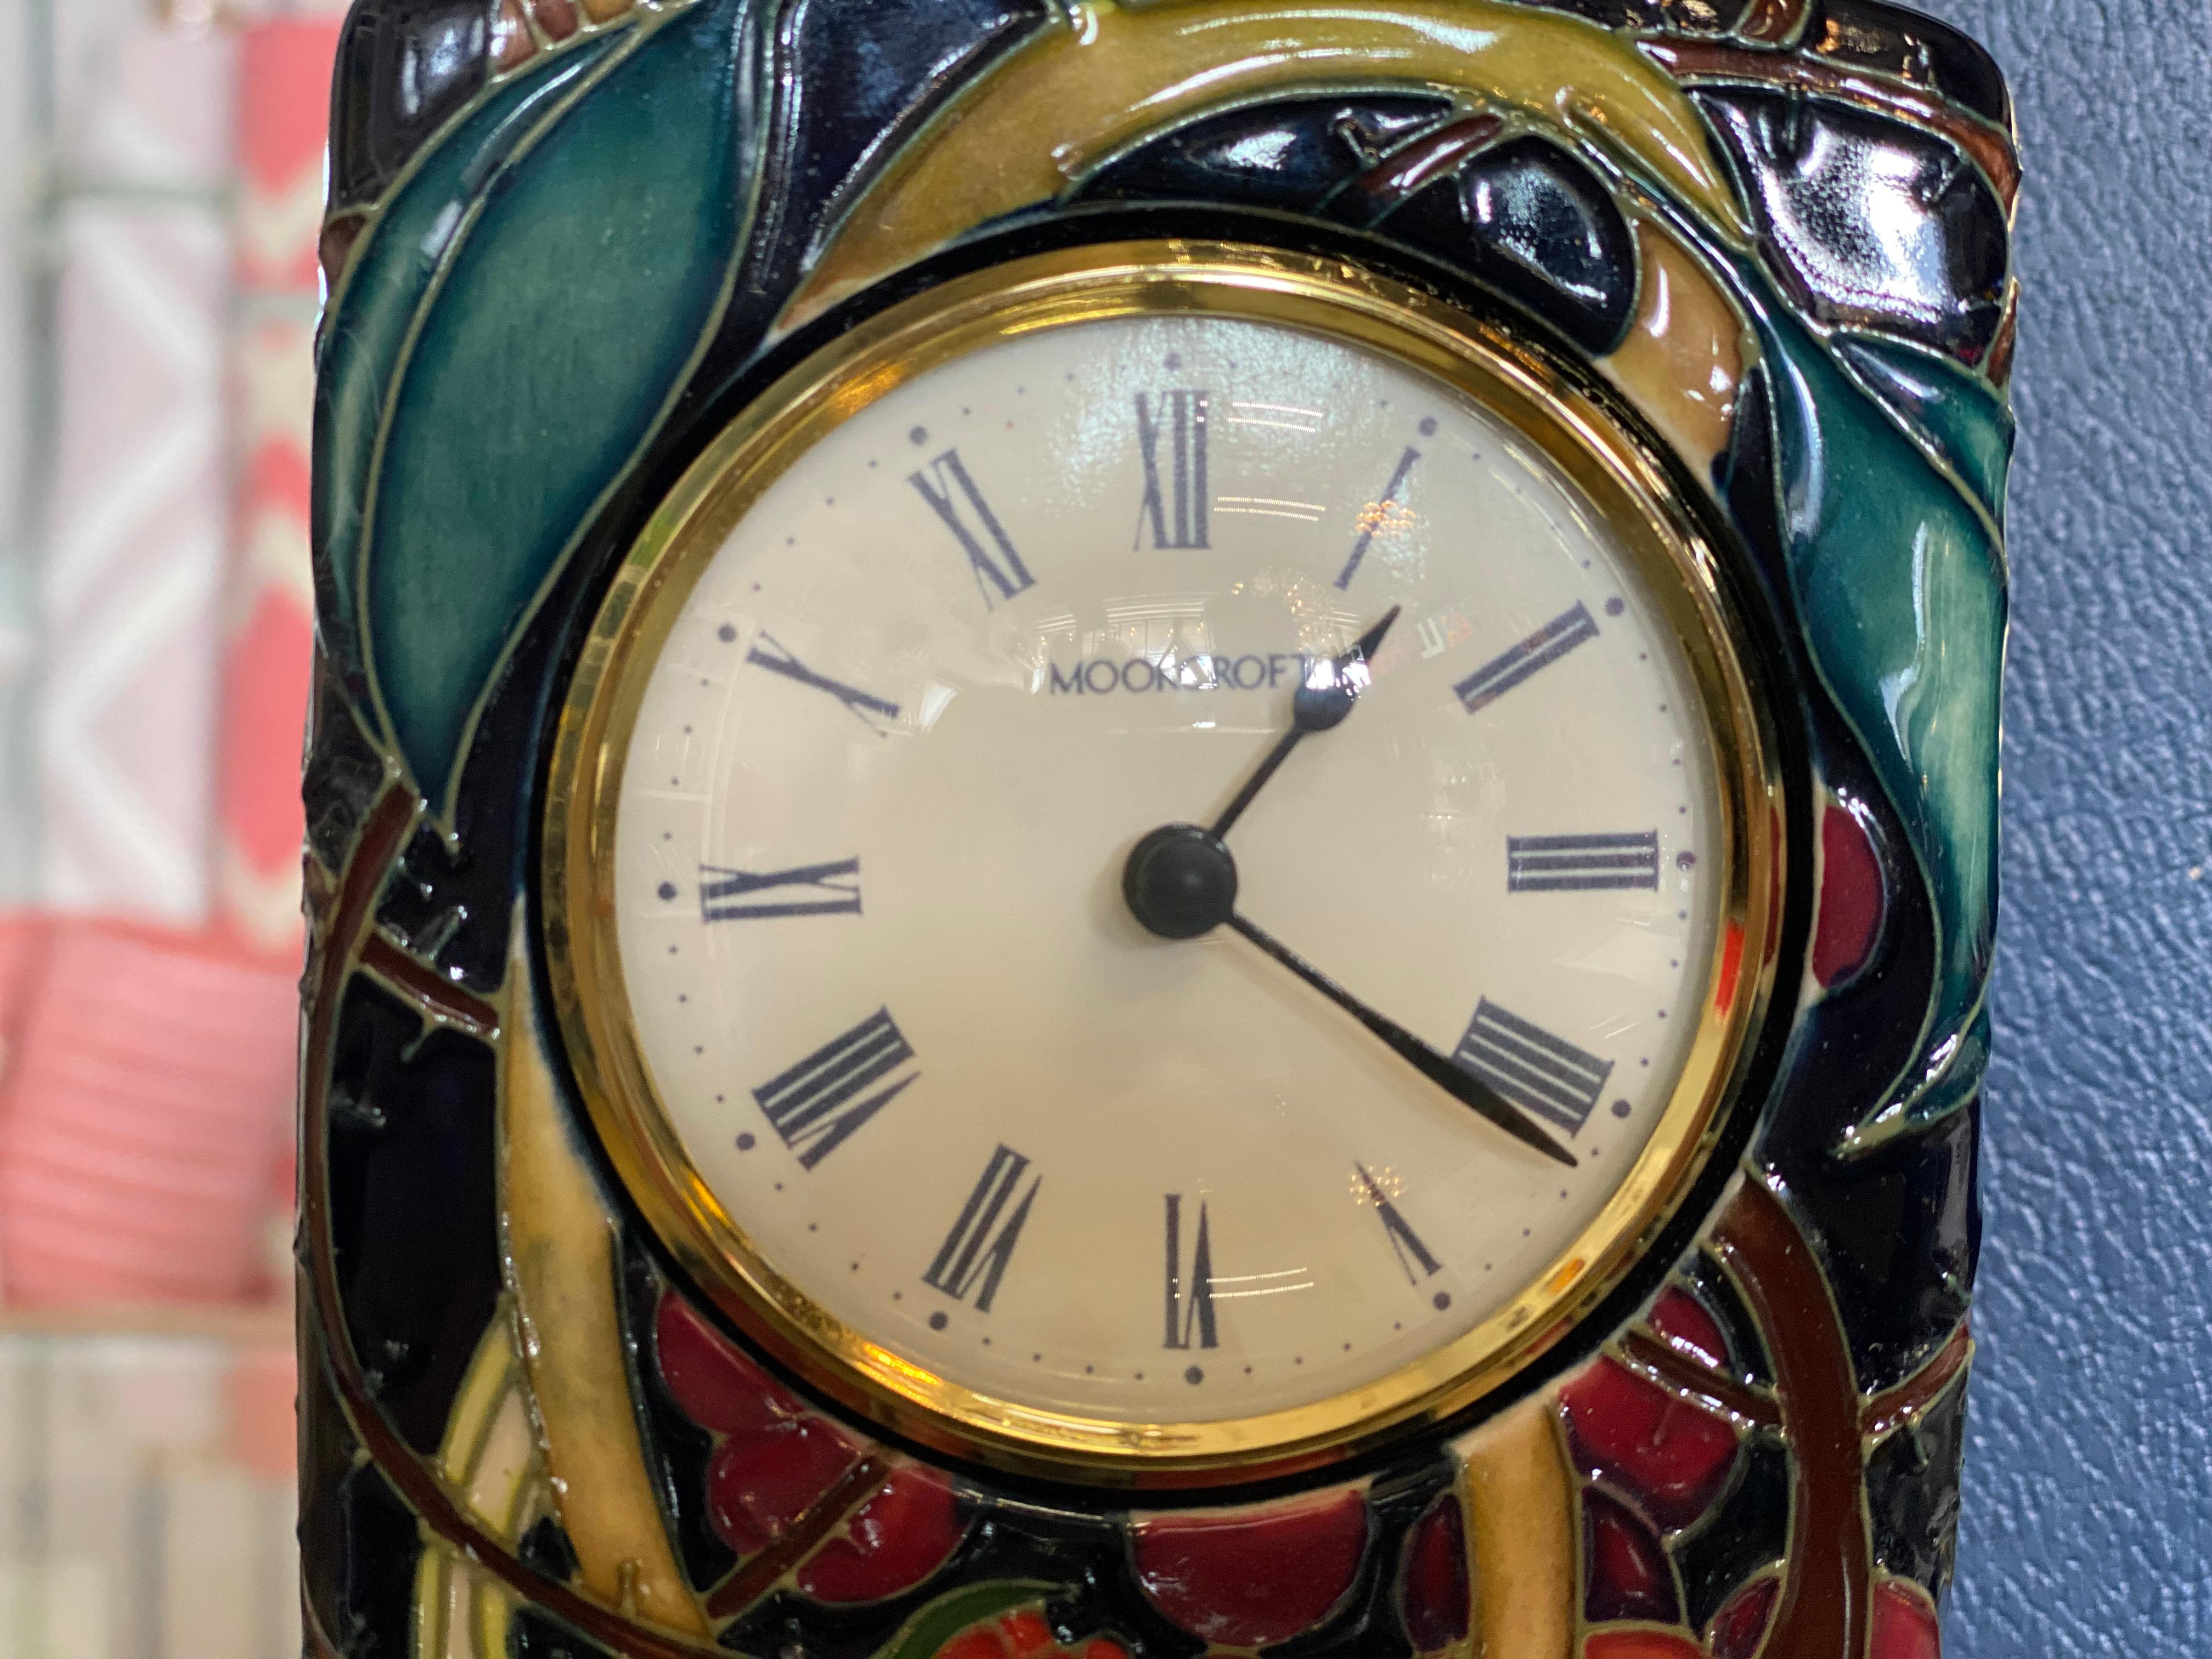 British Moorcroft Pottery CL1 Clock, Queen's Choice Edition Ceramic Art